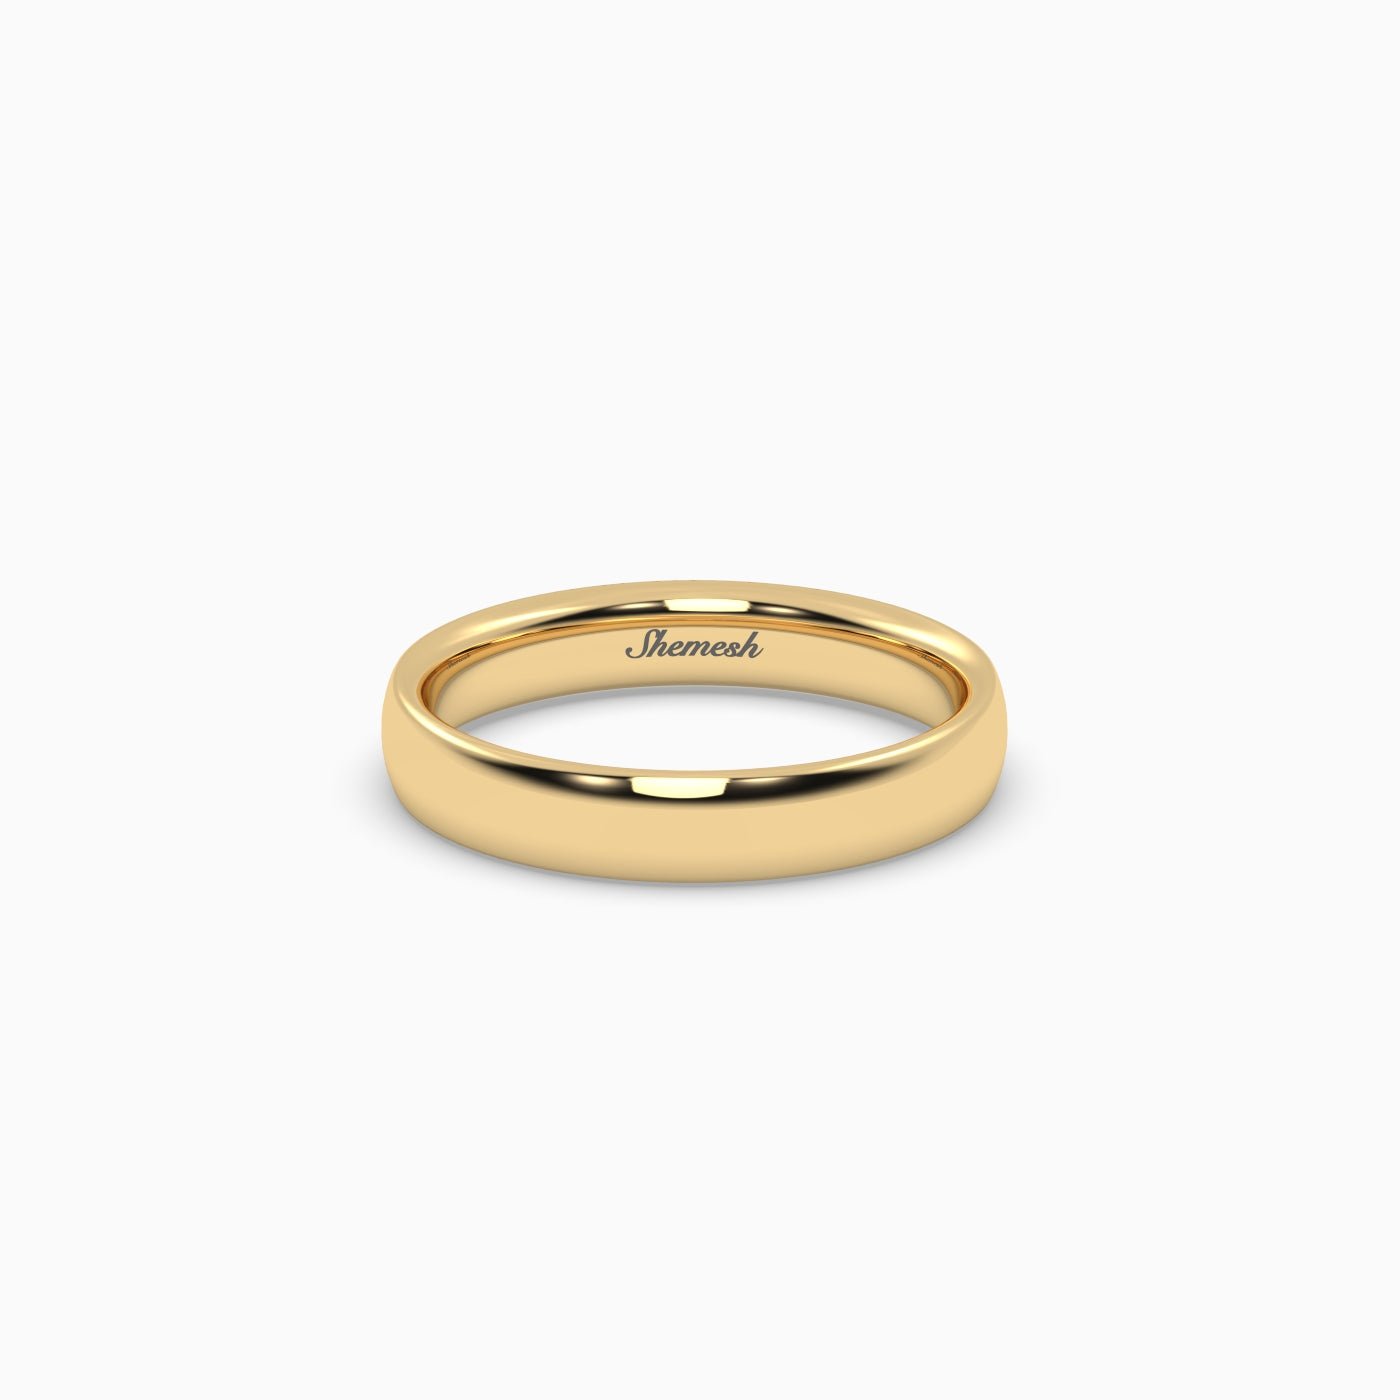 Stunning Concave Women's Wedding Rings - shemesh_diamonds